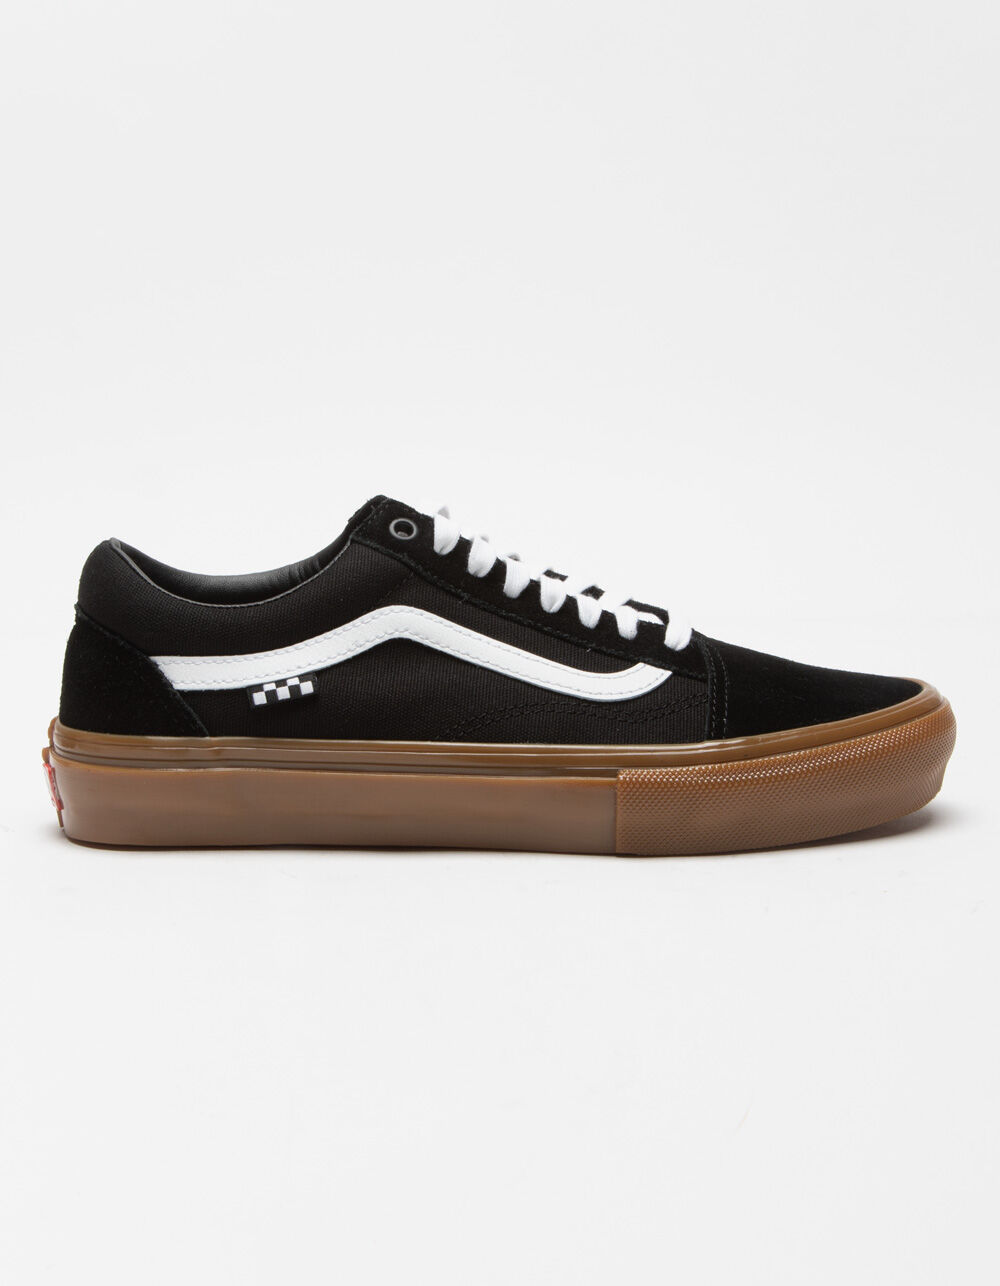 VANS Skate & Old Skool Mens Shoes - BLACK/GUM Tillys